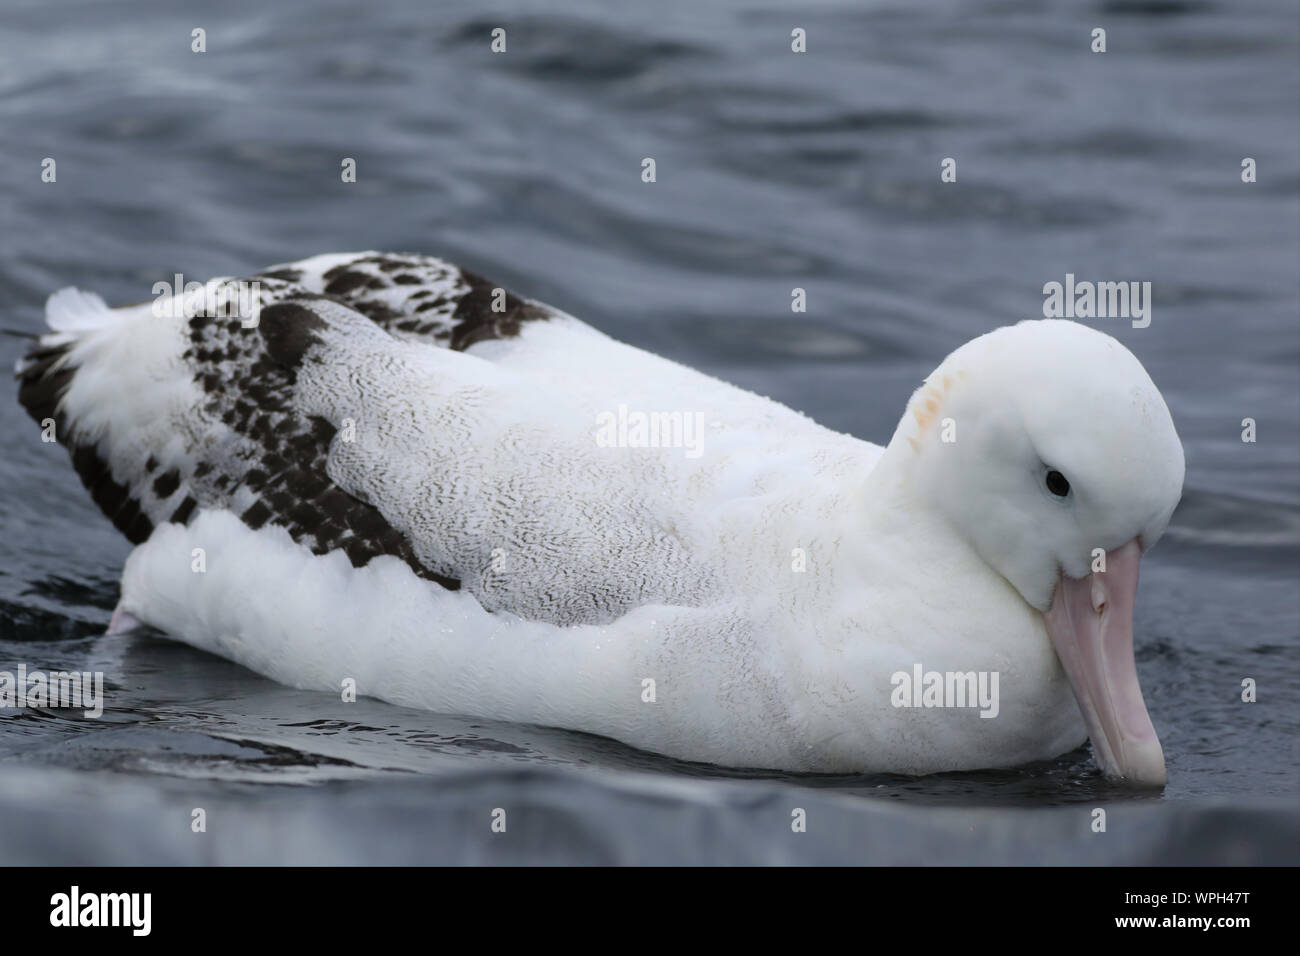 Une Gibson, albatros Diomedea exulans, au repos Banque D'Images